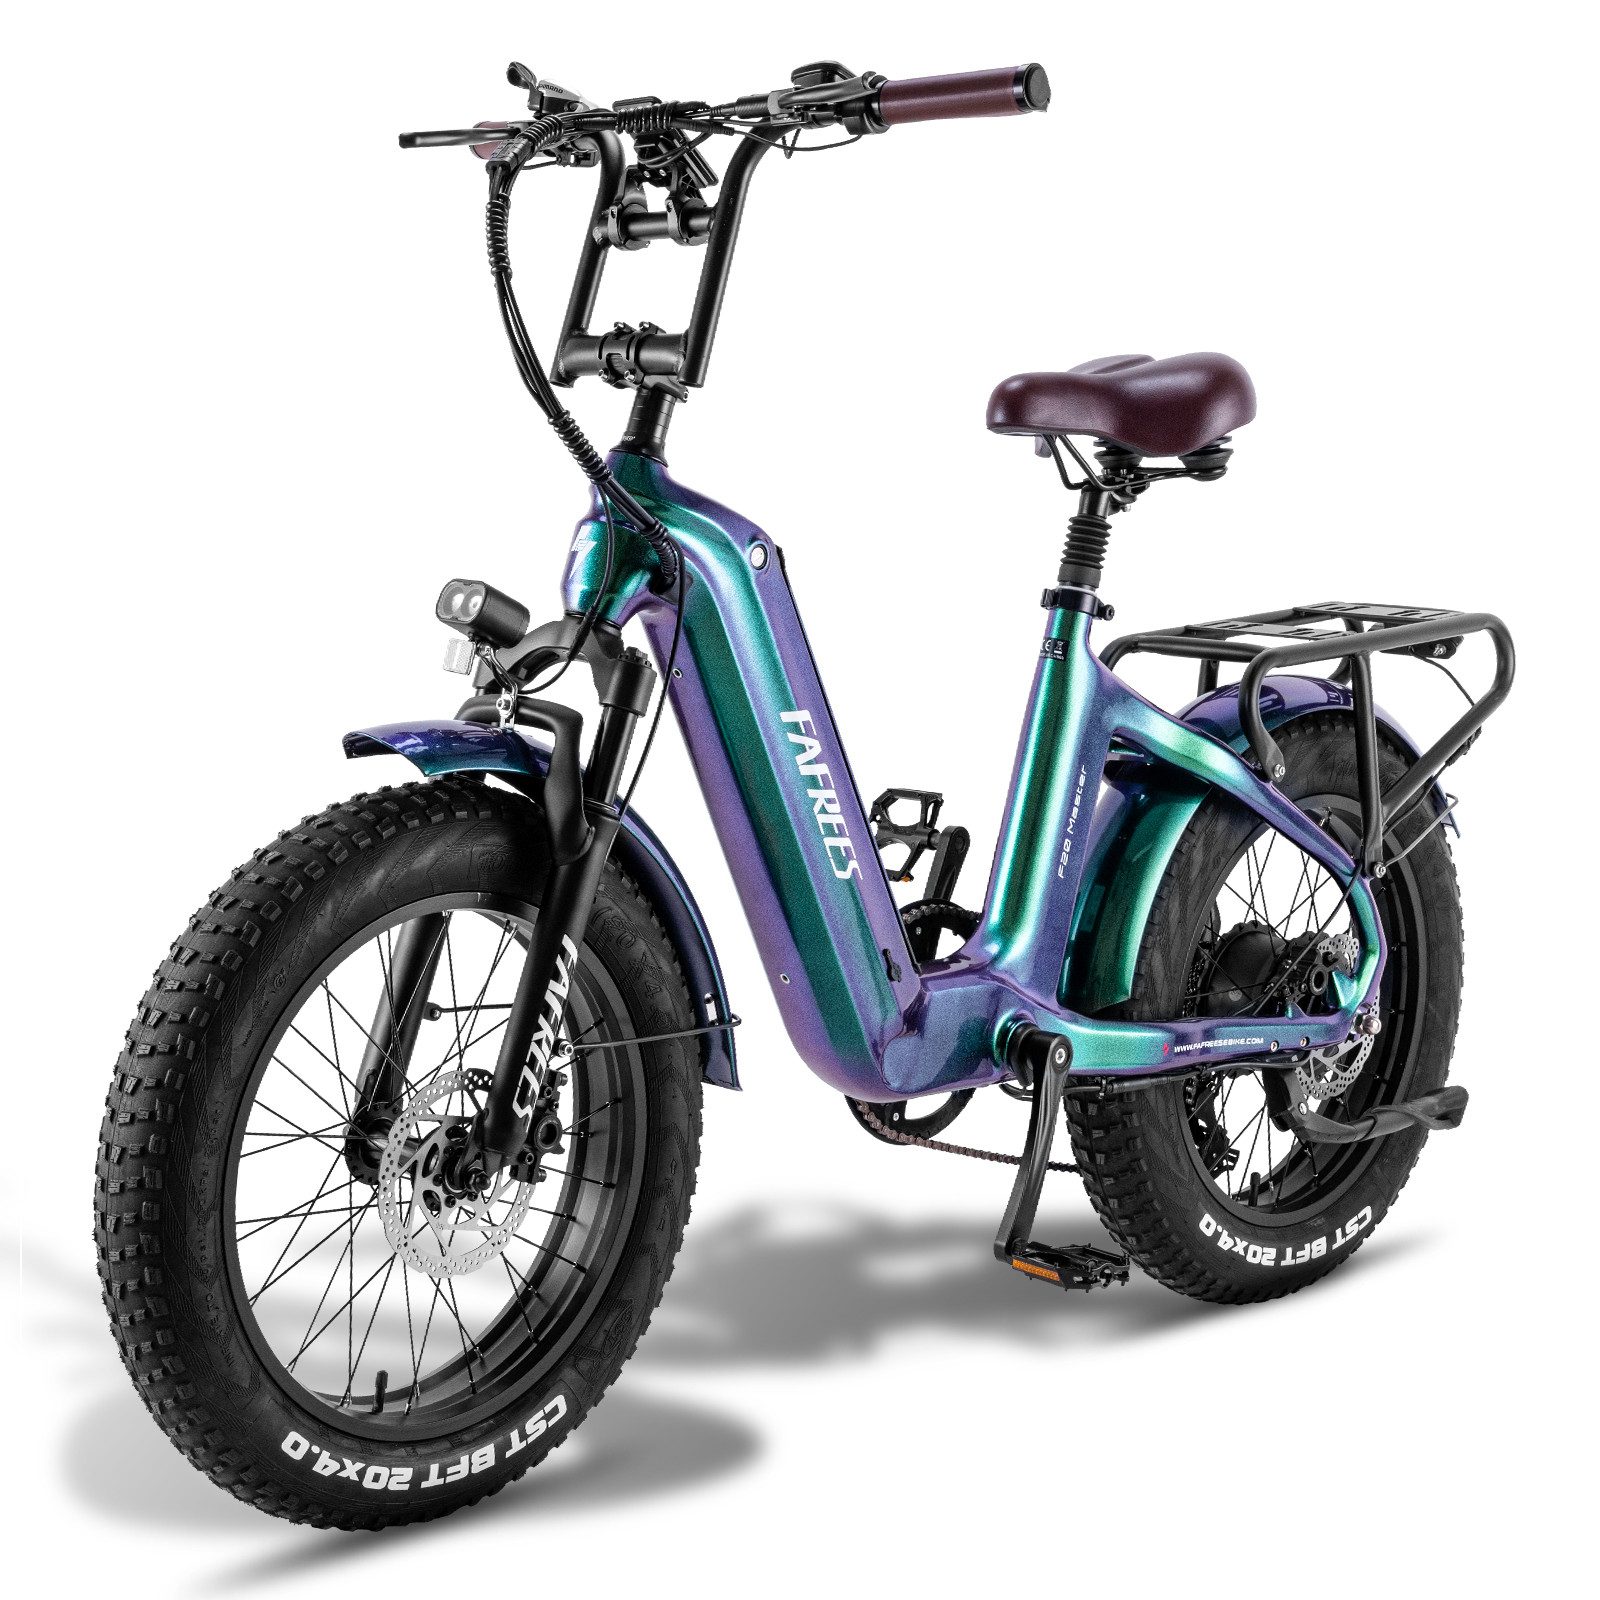 DOTMALL E-Bike Carbon-fiber Fat tire E-bike 20 Zoll Fafrees 48V 22.5AH Mountainbike